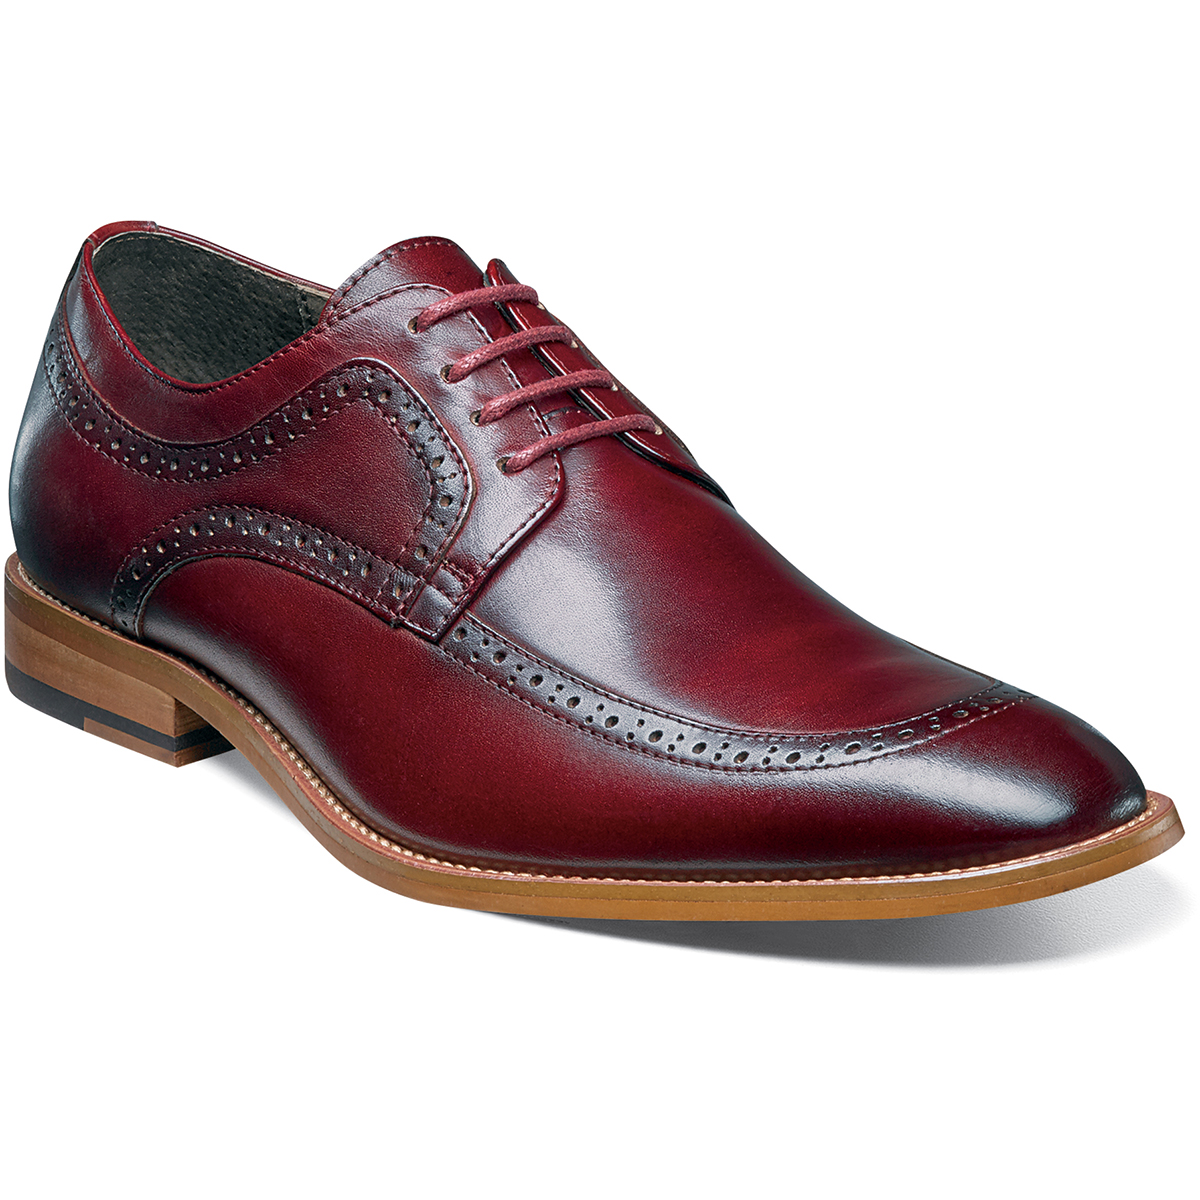 Men's Dress Shoes | Red Moc Toe Oxford | Stacy Adams Dwight